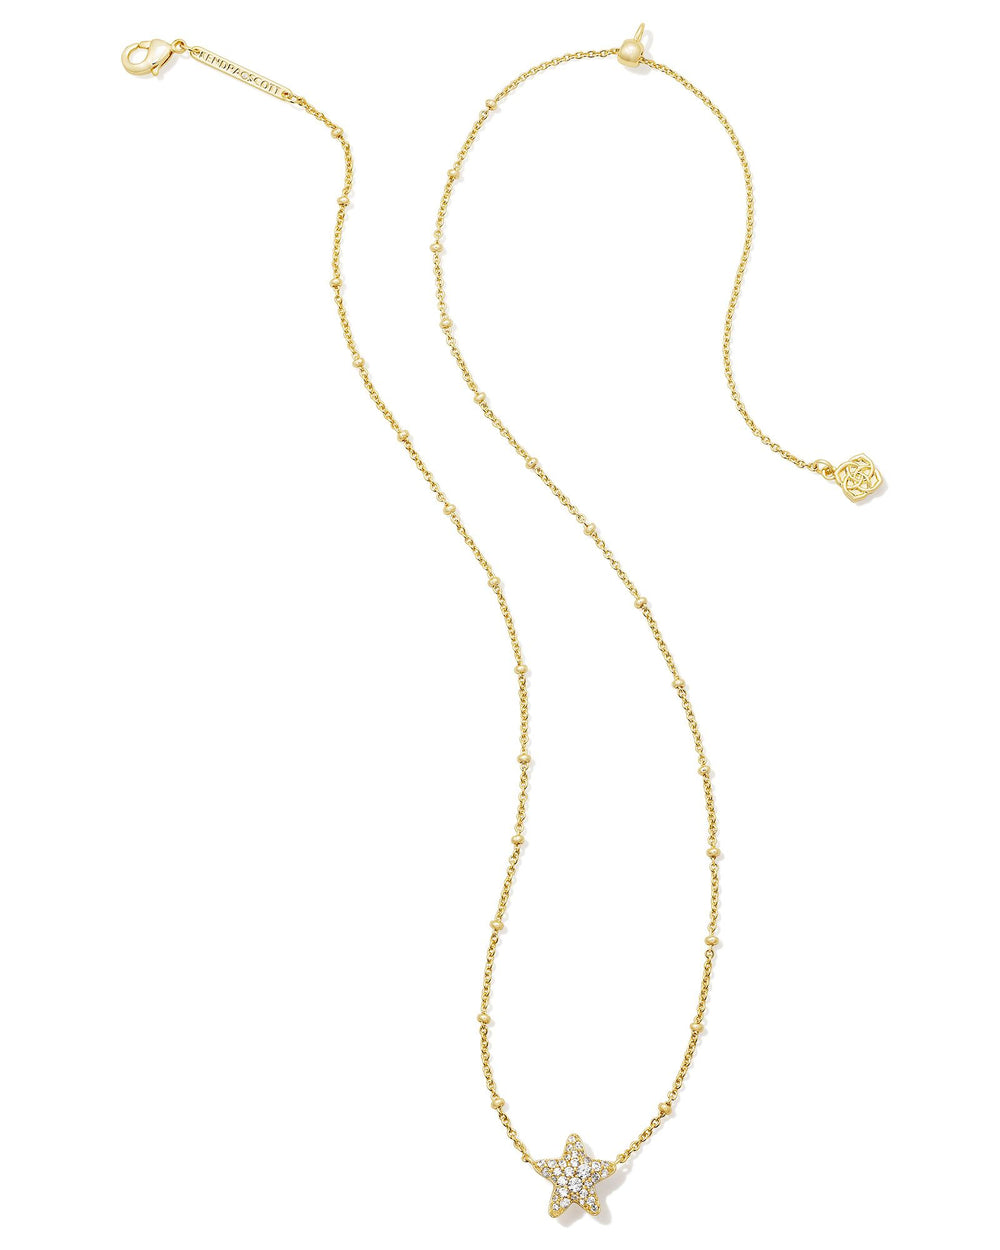 Kendra Scott Jae Star Pave Short Pendant Necklace Gold White Crystal - Gabrielle's Biloxi